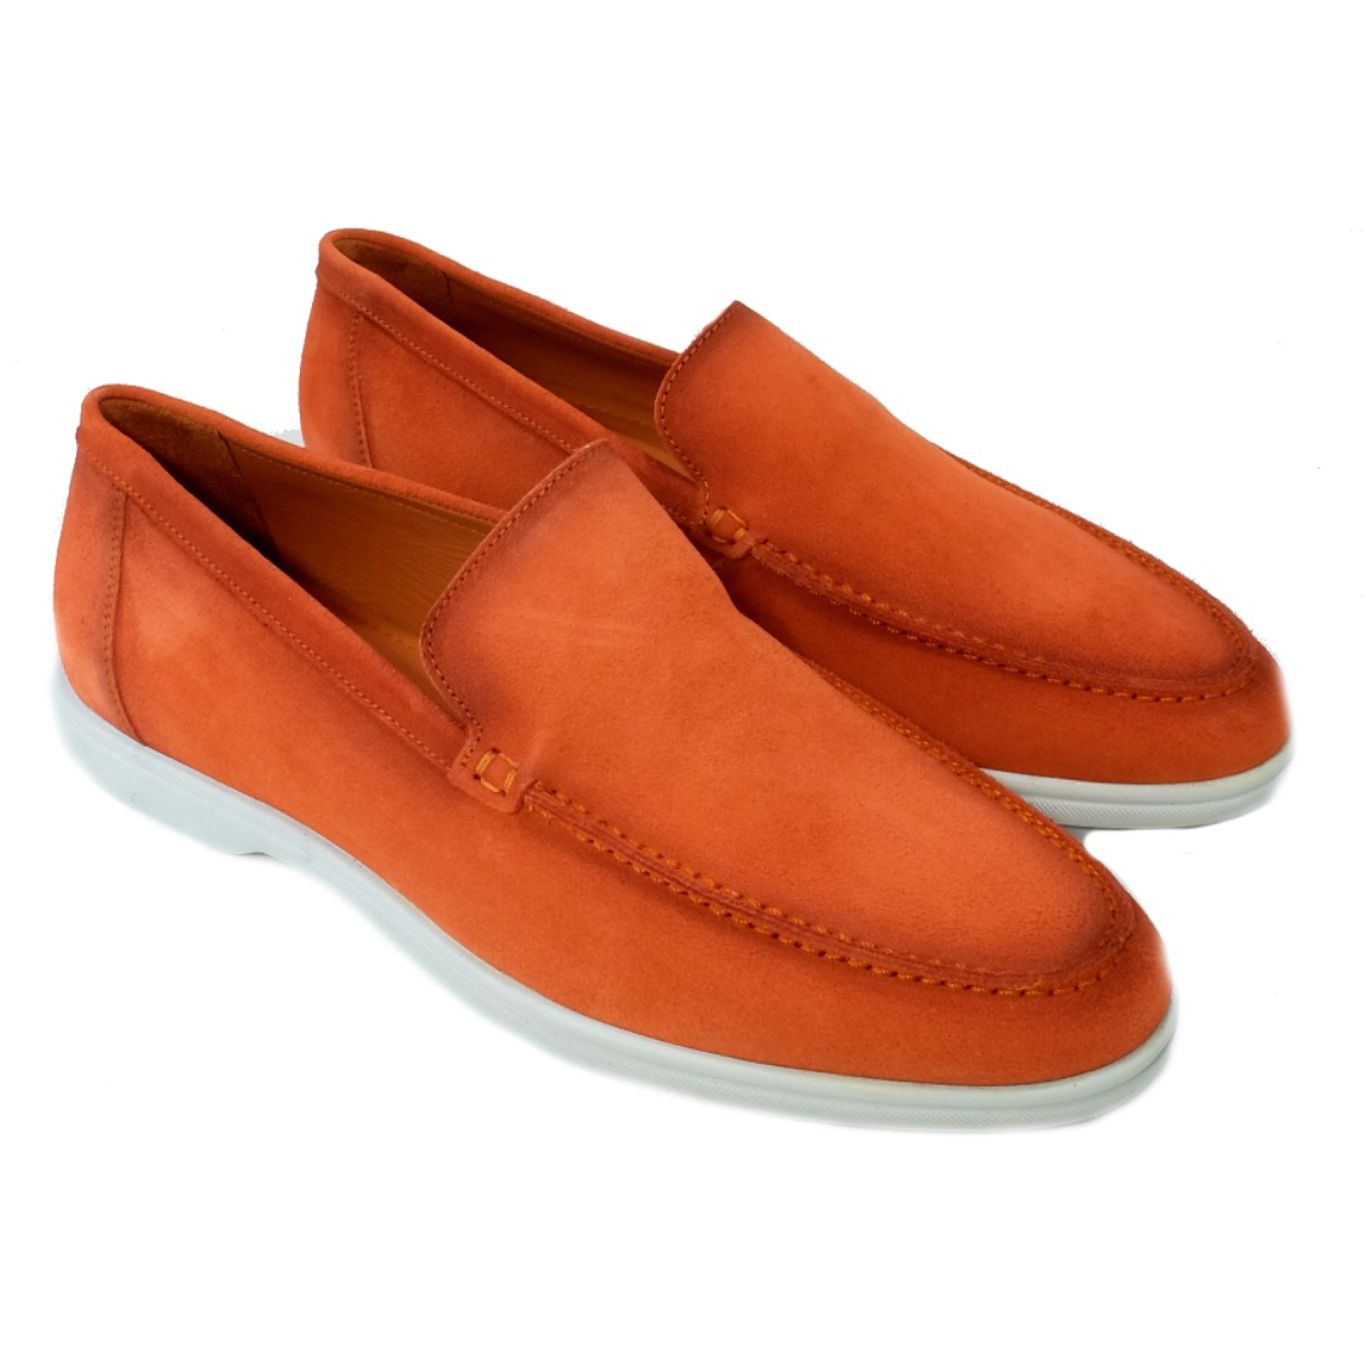 Rio Casual Suede Loafer in Tangerine by Alan Payne Footwear